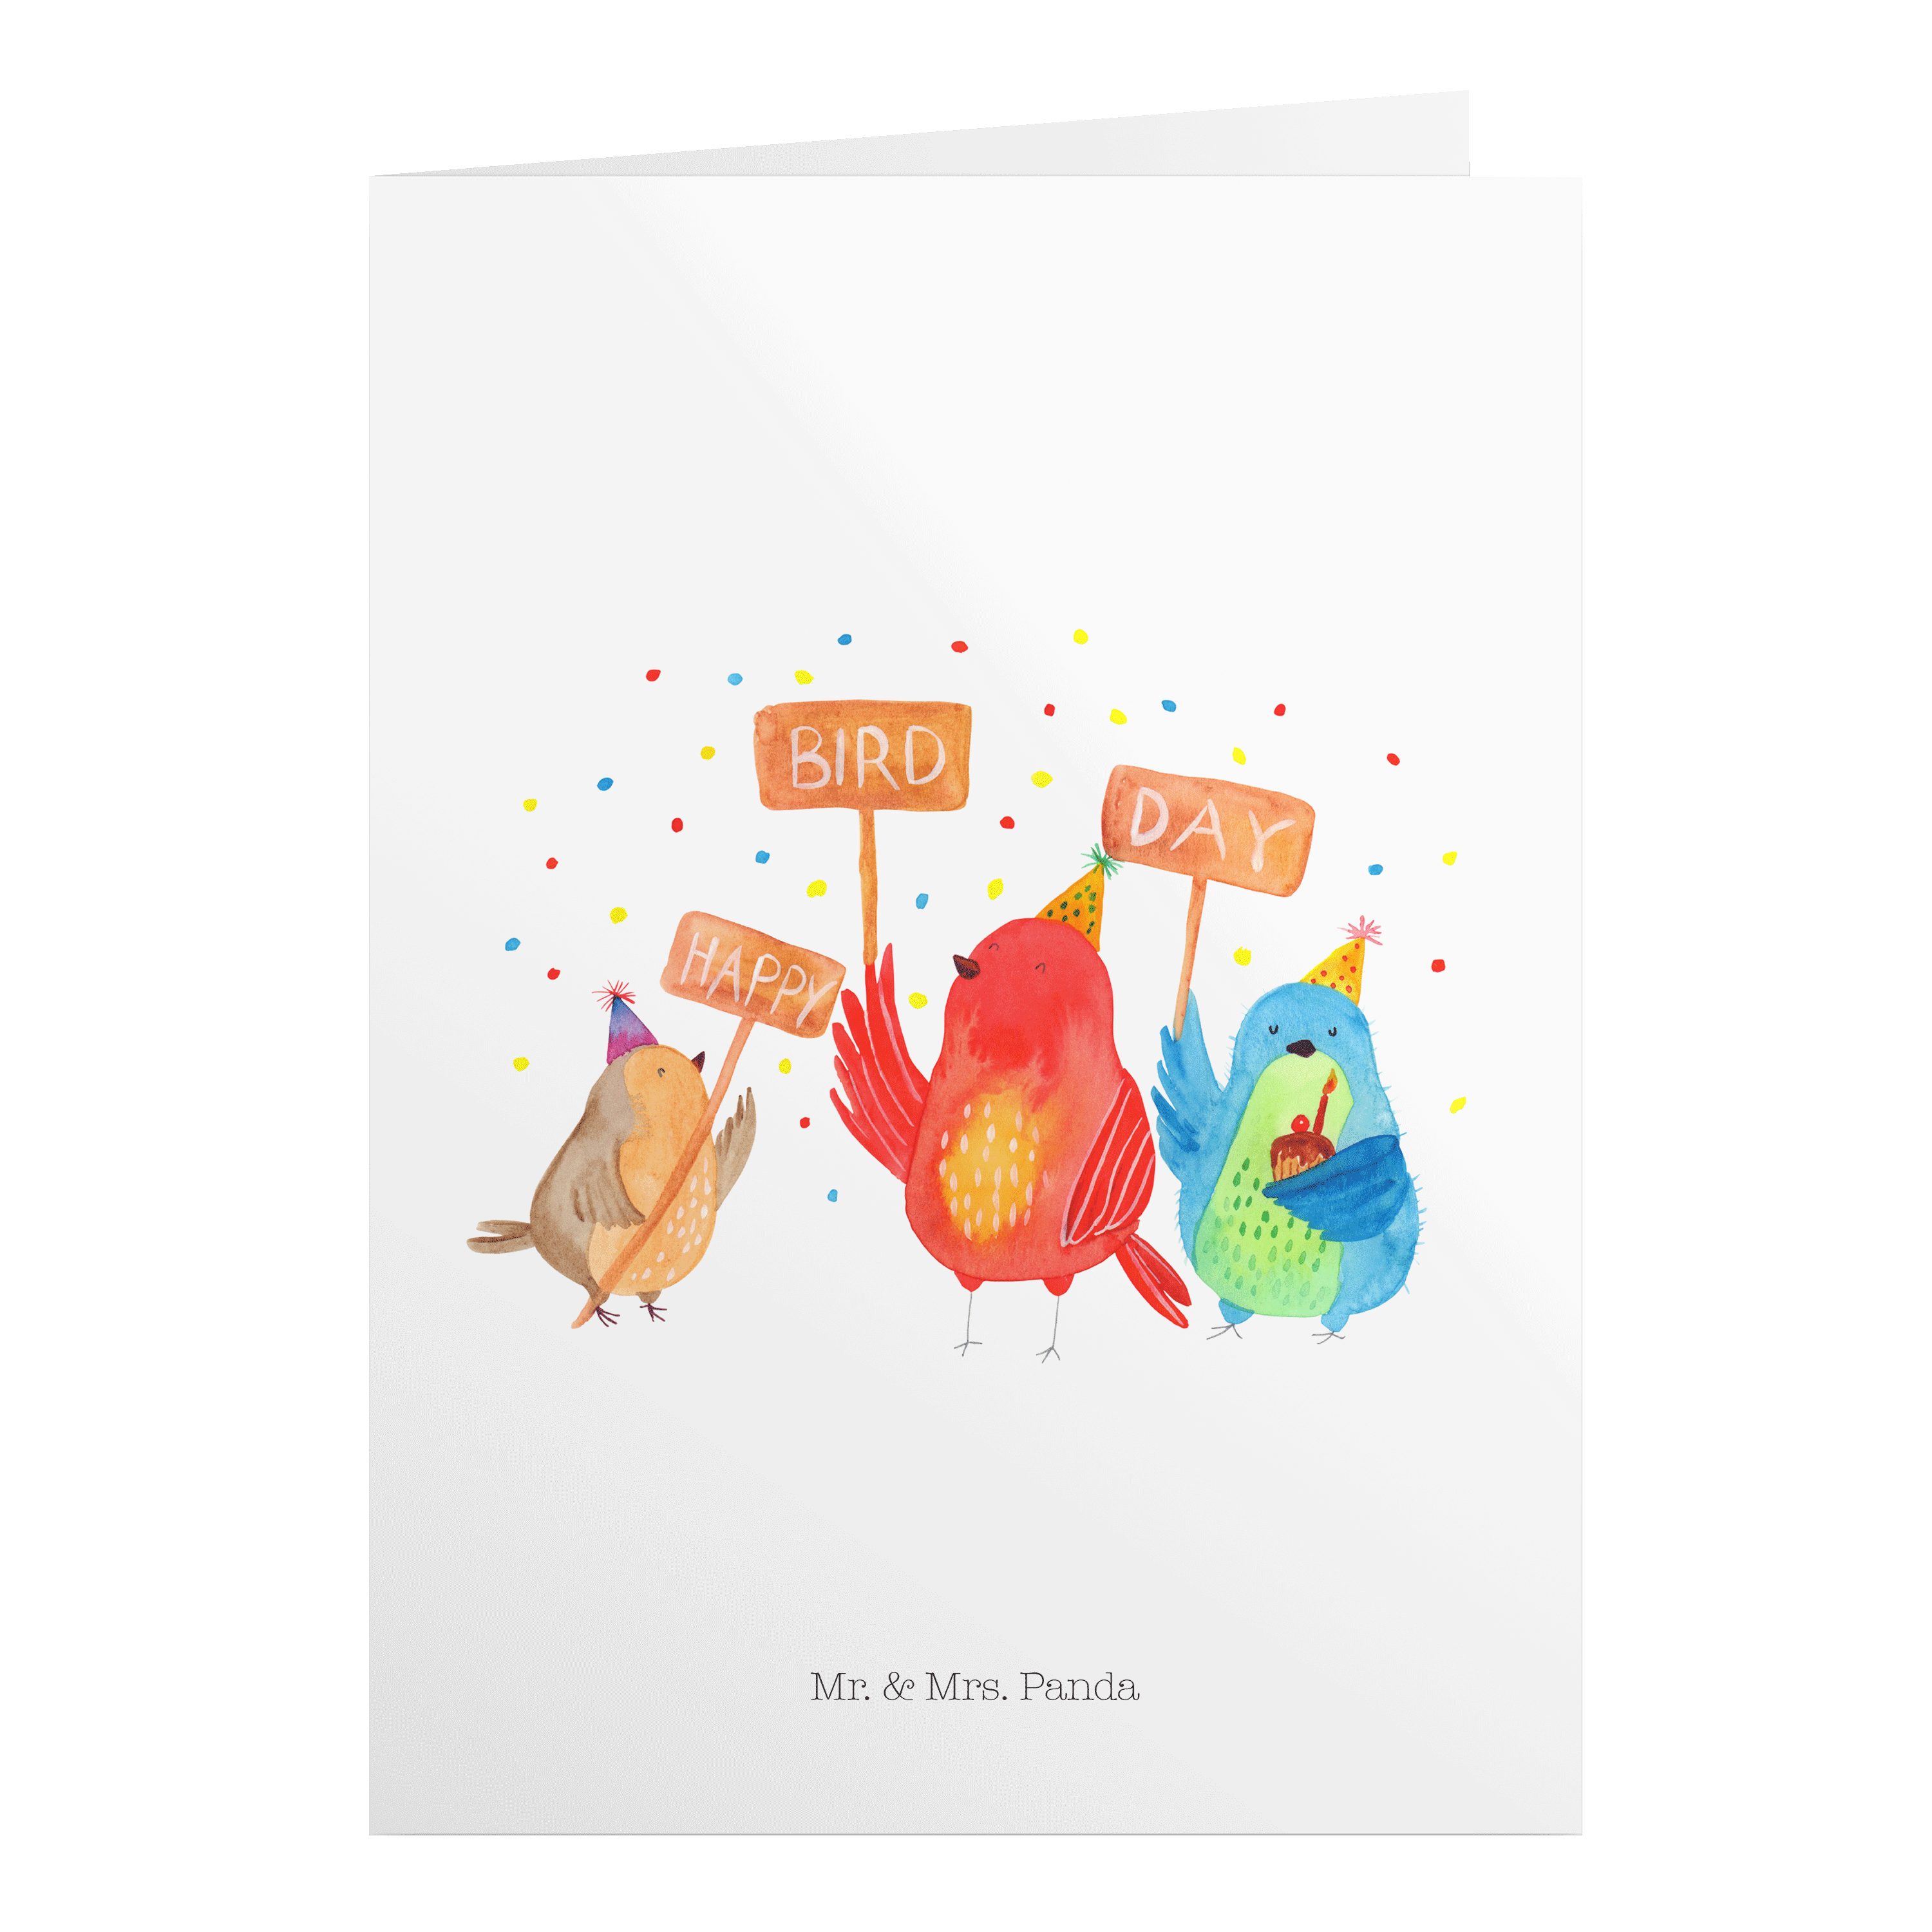 Mr. & Mrs. Panda Geburtstagskarten Happy Birdday - Weiß - Geschenk, Geburtstag, Vögel, Einladungskarte